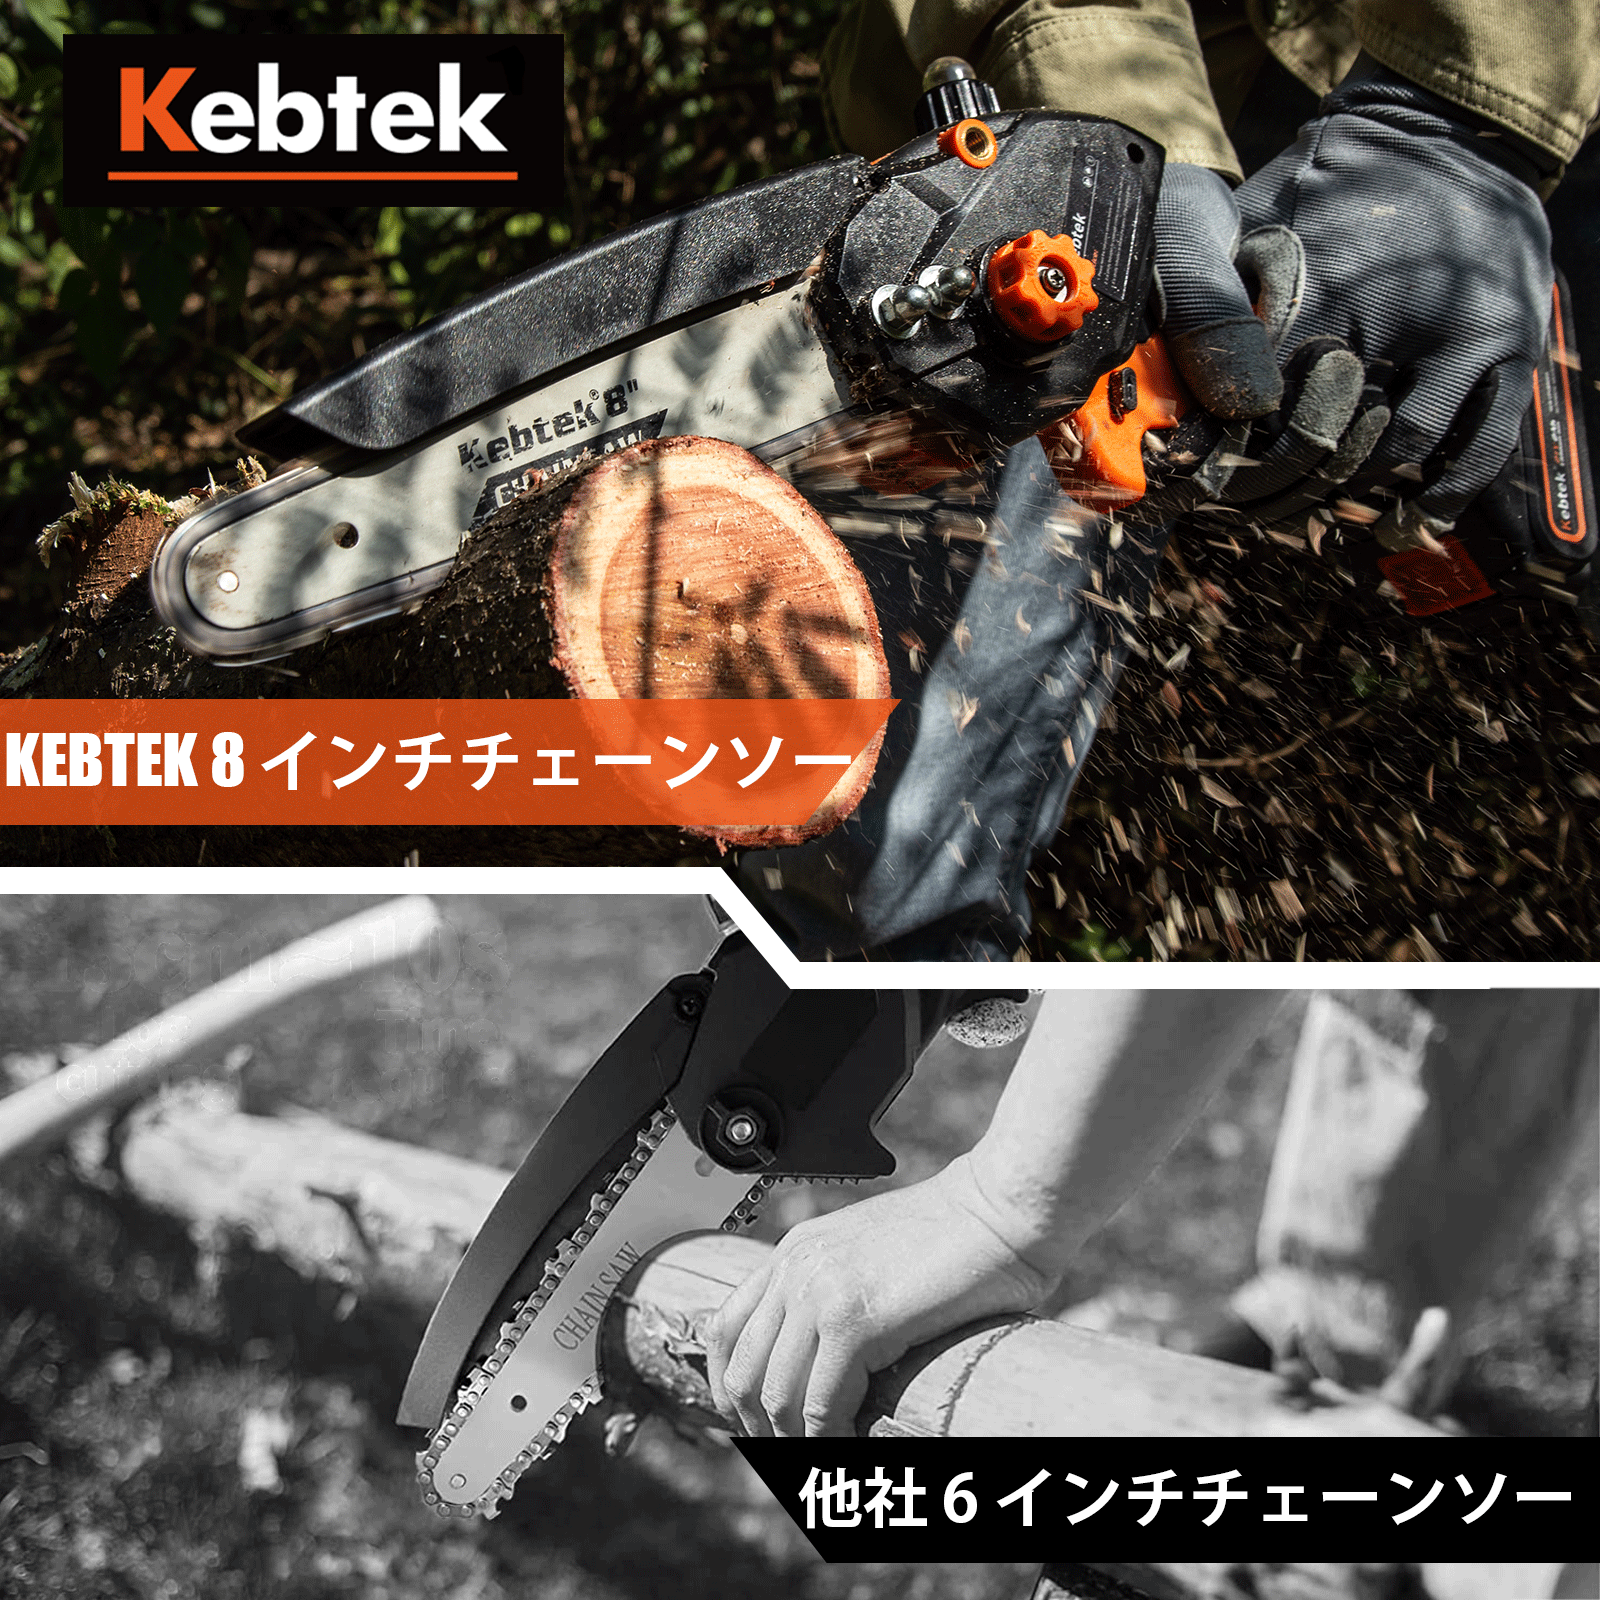 Kebtek 充電式 チェーンソー 8インチ 品番DLA-0016